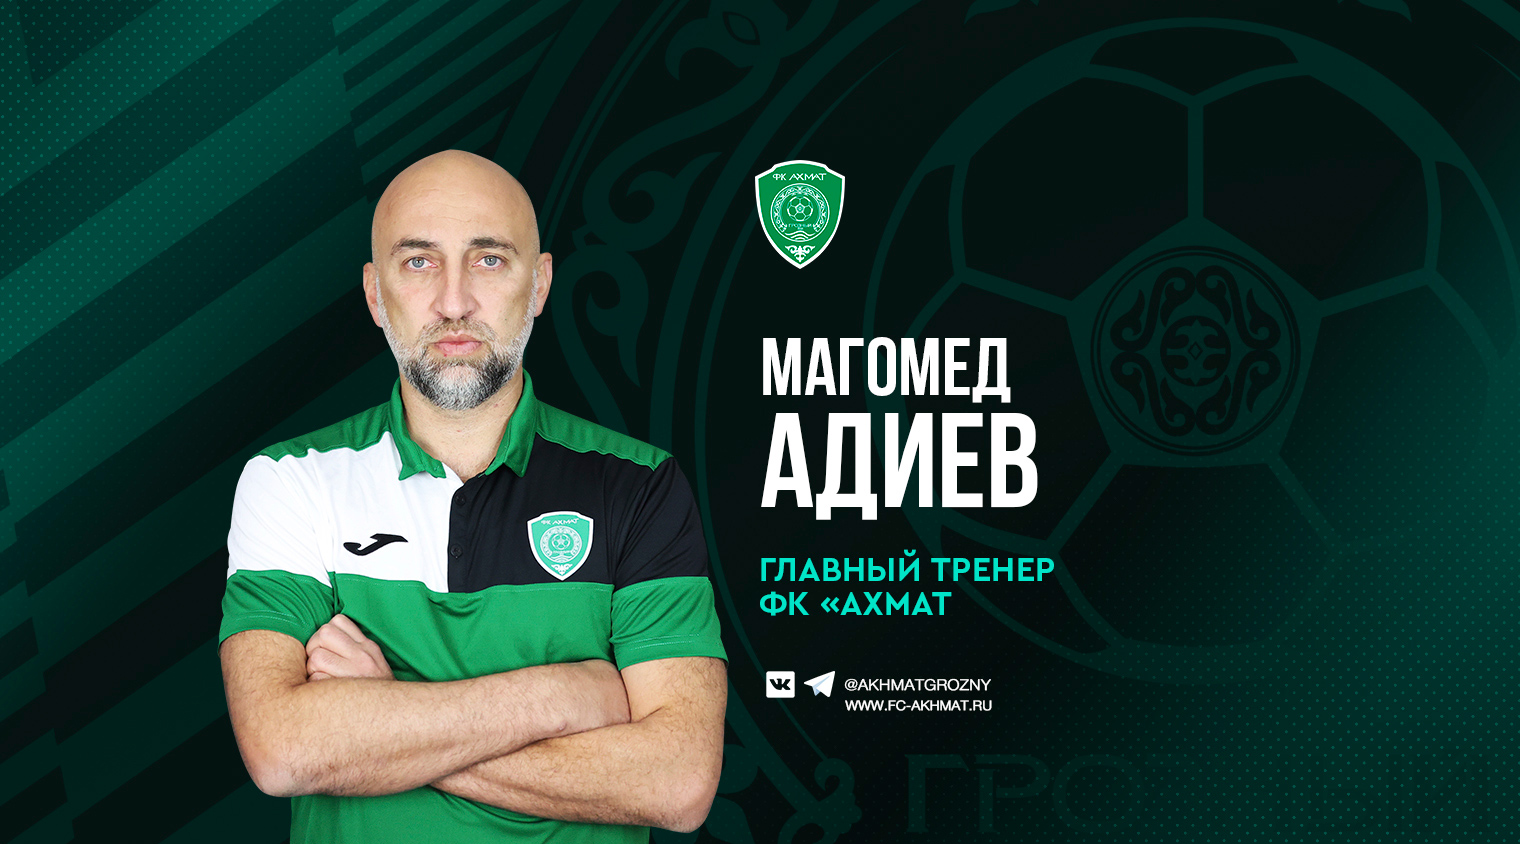 Магомед Адиев – главный тренер ФК «Ахмат»!